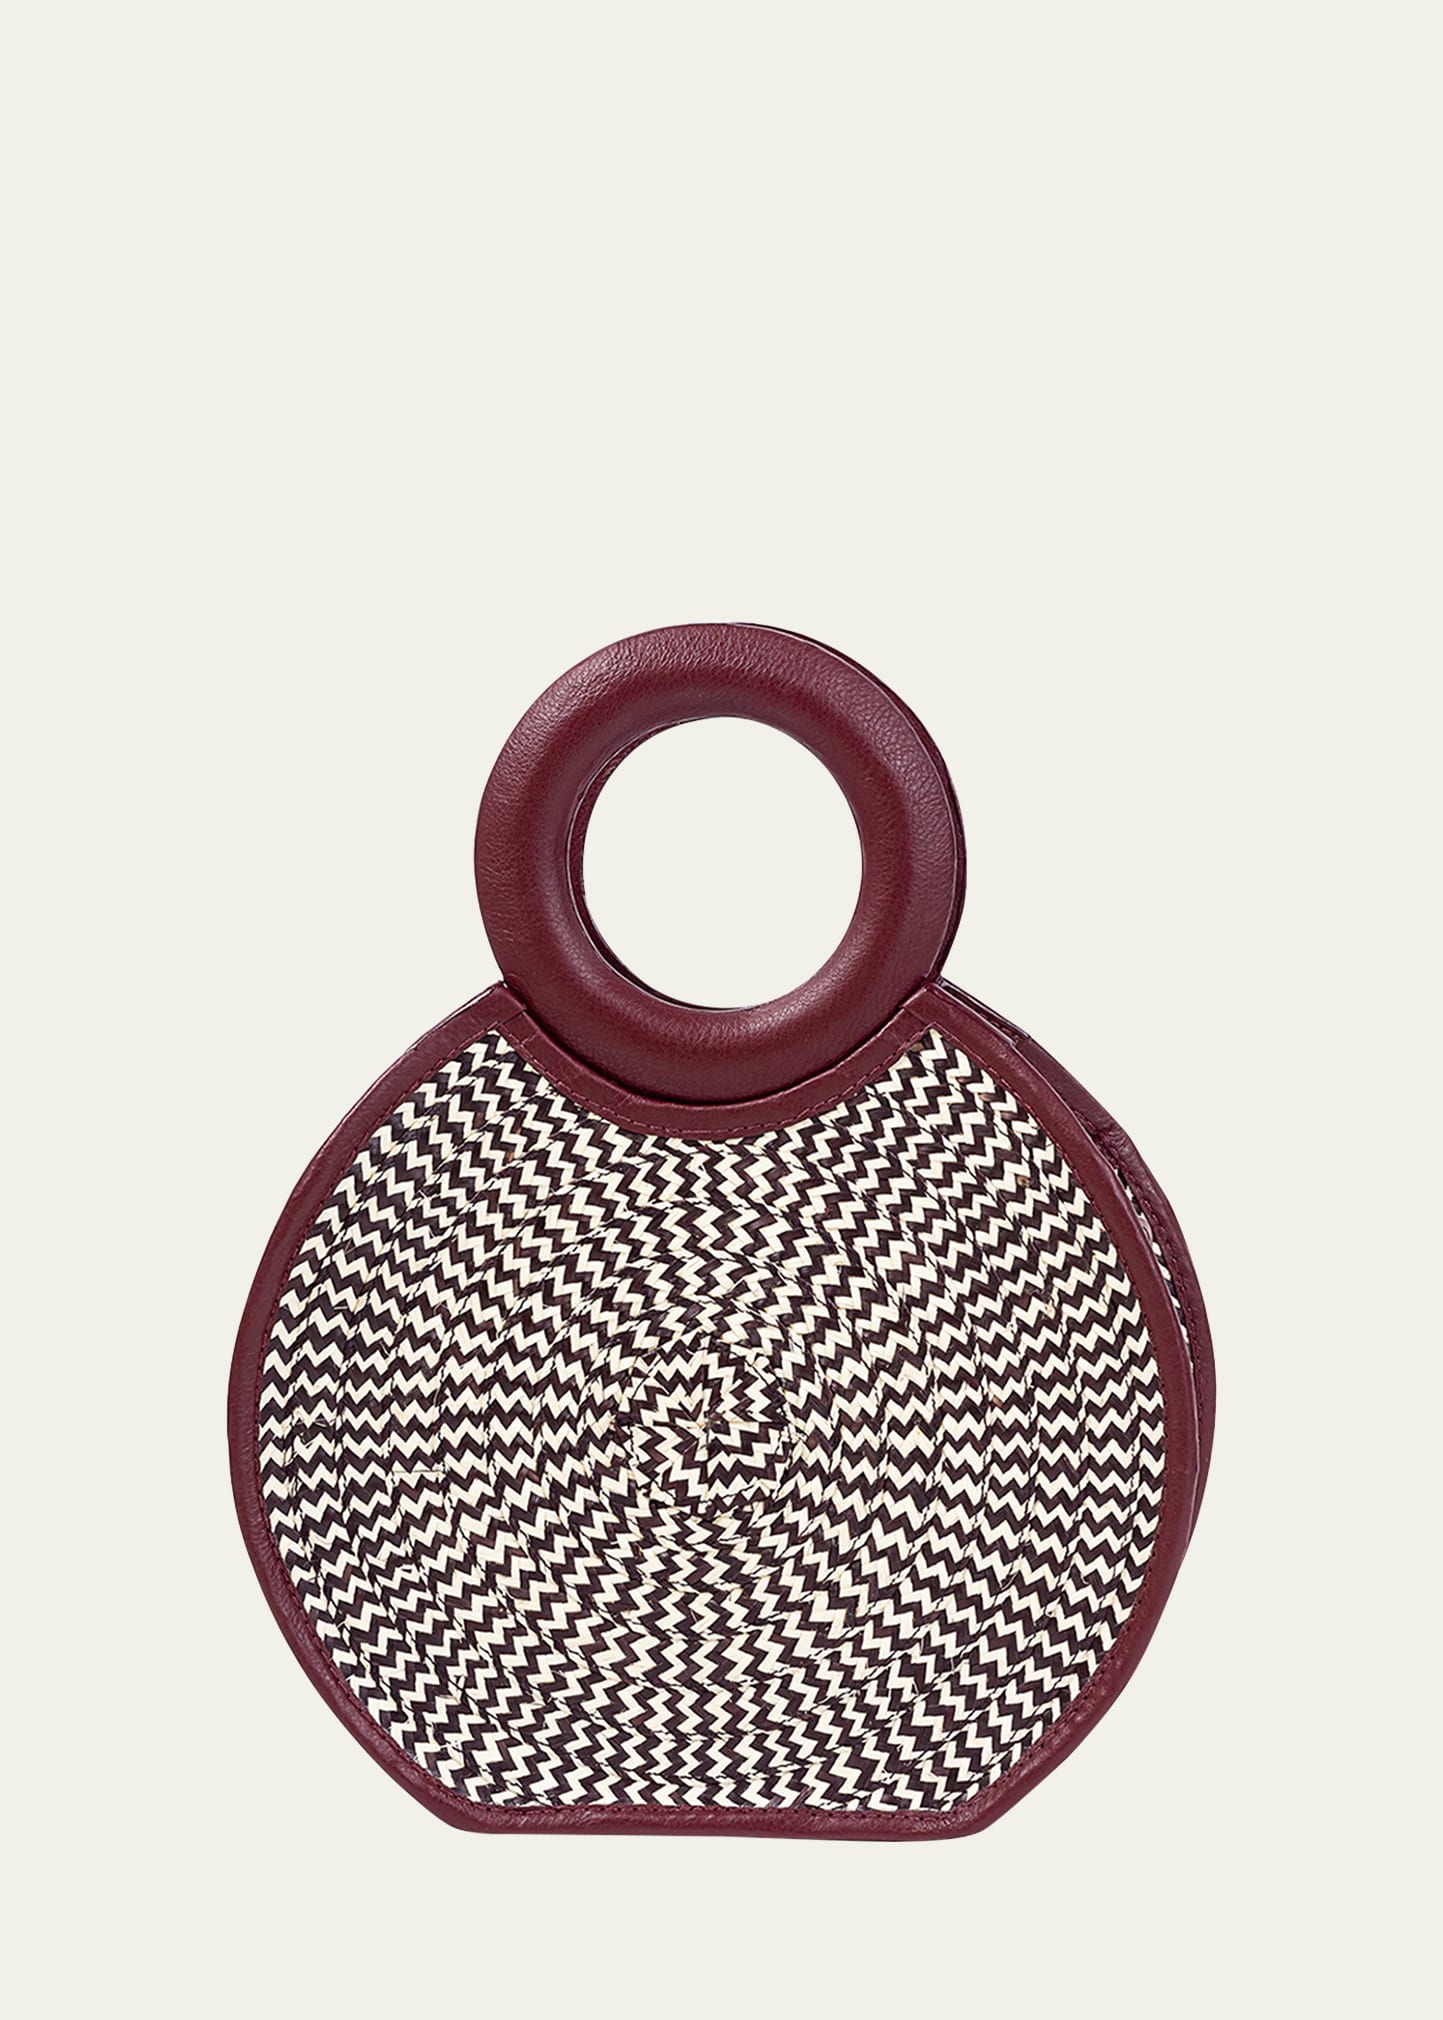 ADRIANA CASTRO Zenu Bicolor Woven Cana Flecha/Leather Top-Handle Bag